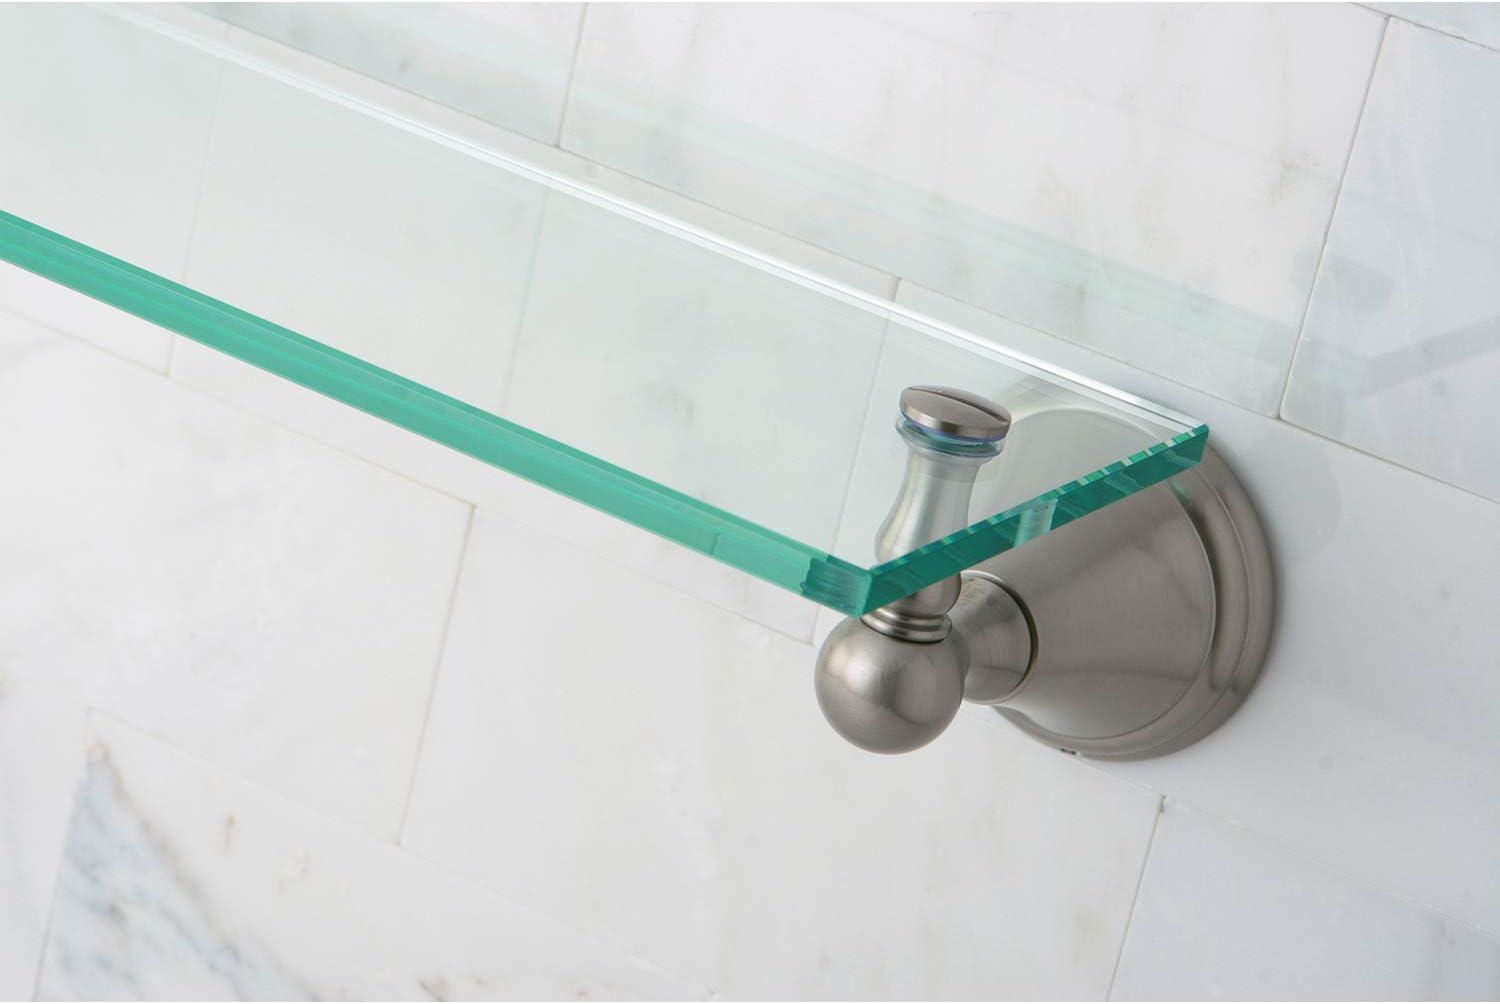 Satin Nickel Contemporary Bathroom Glass Wall Shelf